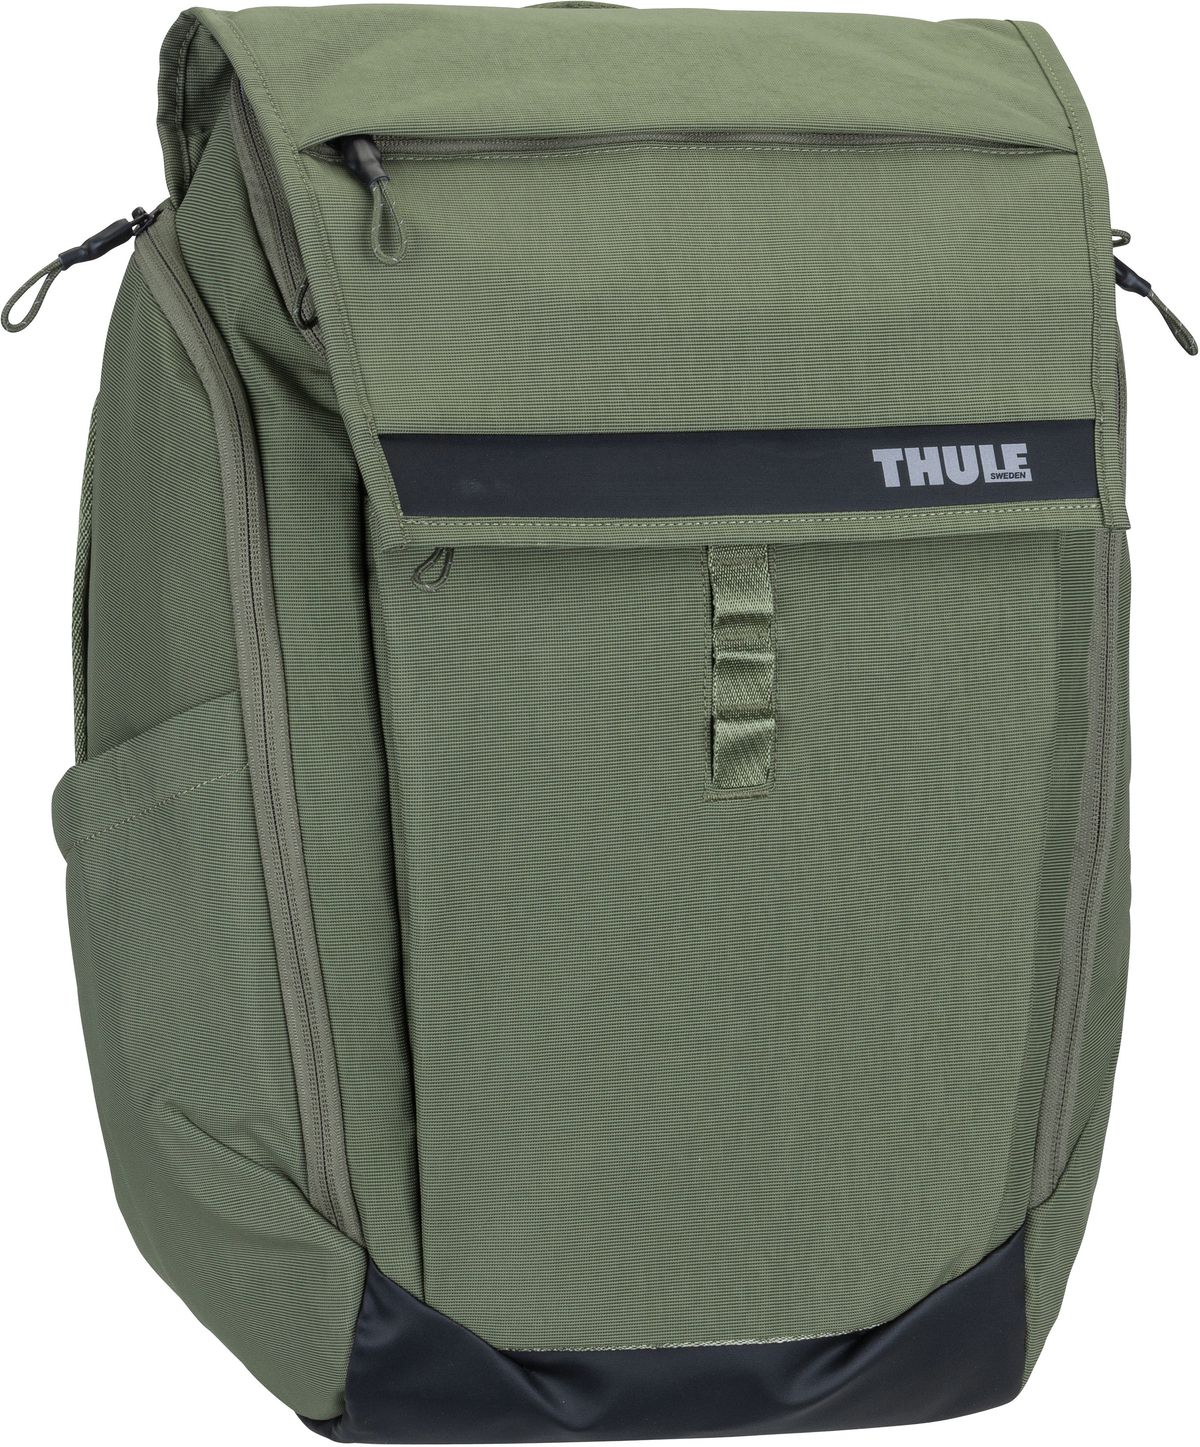 Thule Paramount 3 Backpack 27L  in Soft Green (27 Liter), Rucksack / Backpack